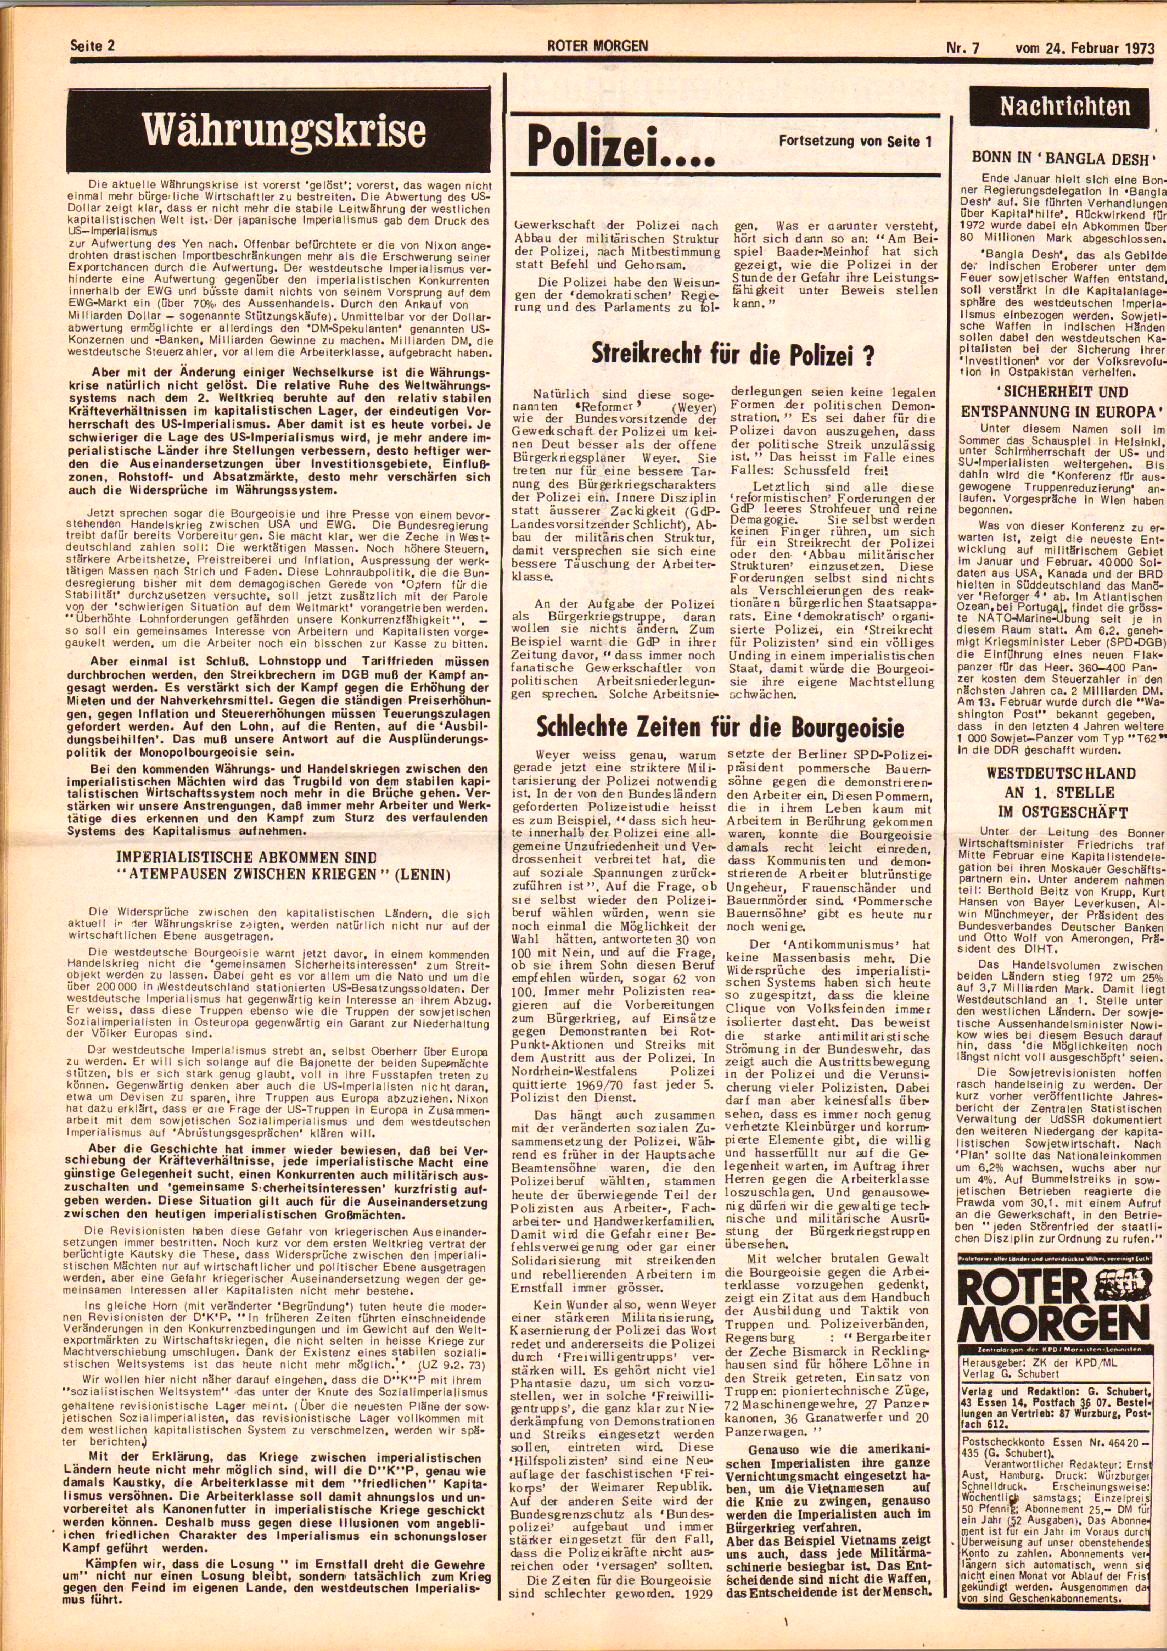 Roter Morgen, 7. Jg., 24. Februar 1973, Nr. 7, Seite 2